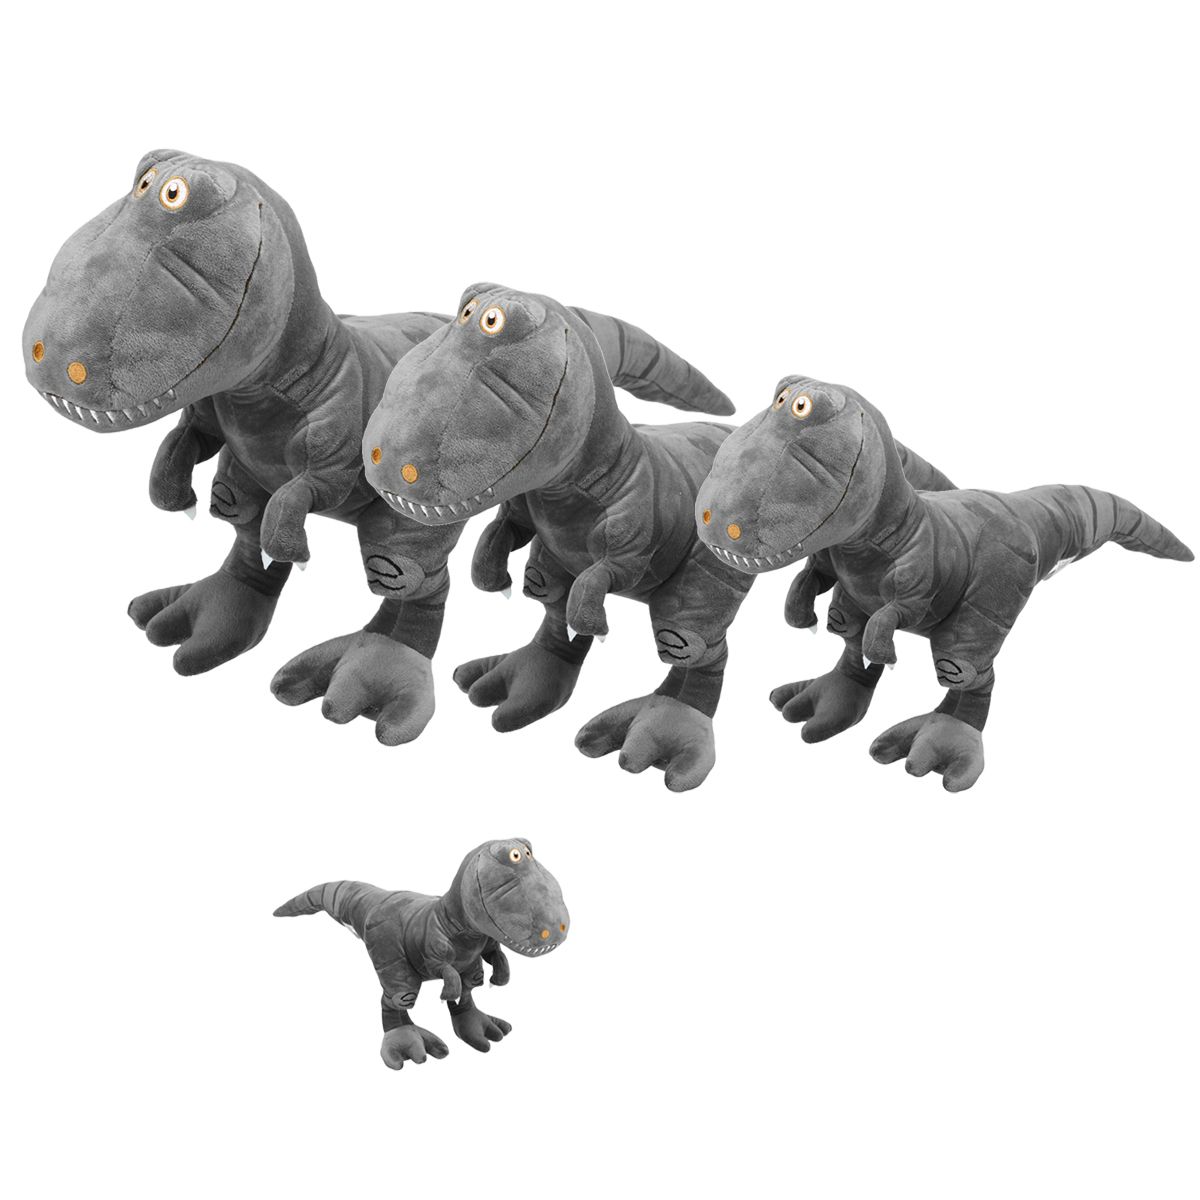 45-100cm-Dinosaur-Plush-Toys-Cartoon-Tyrannosaurus-Cute-Stuffed-Toys-For-Kids-Children-Boys-Birthday-1559155